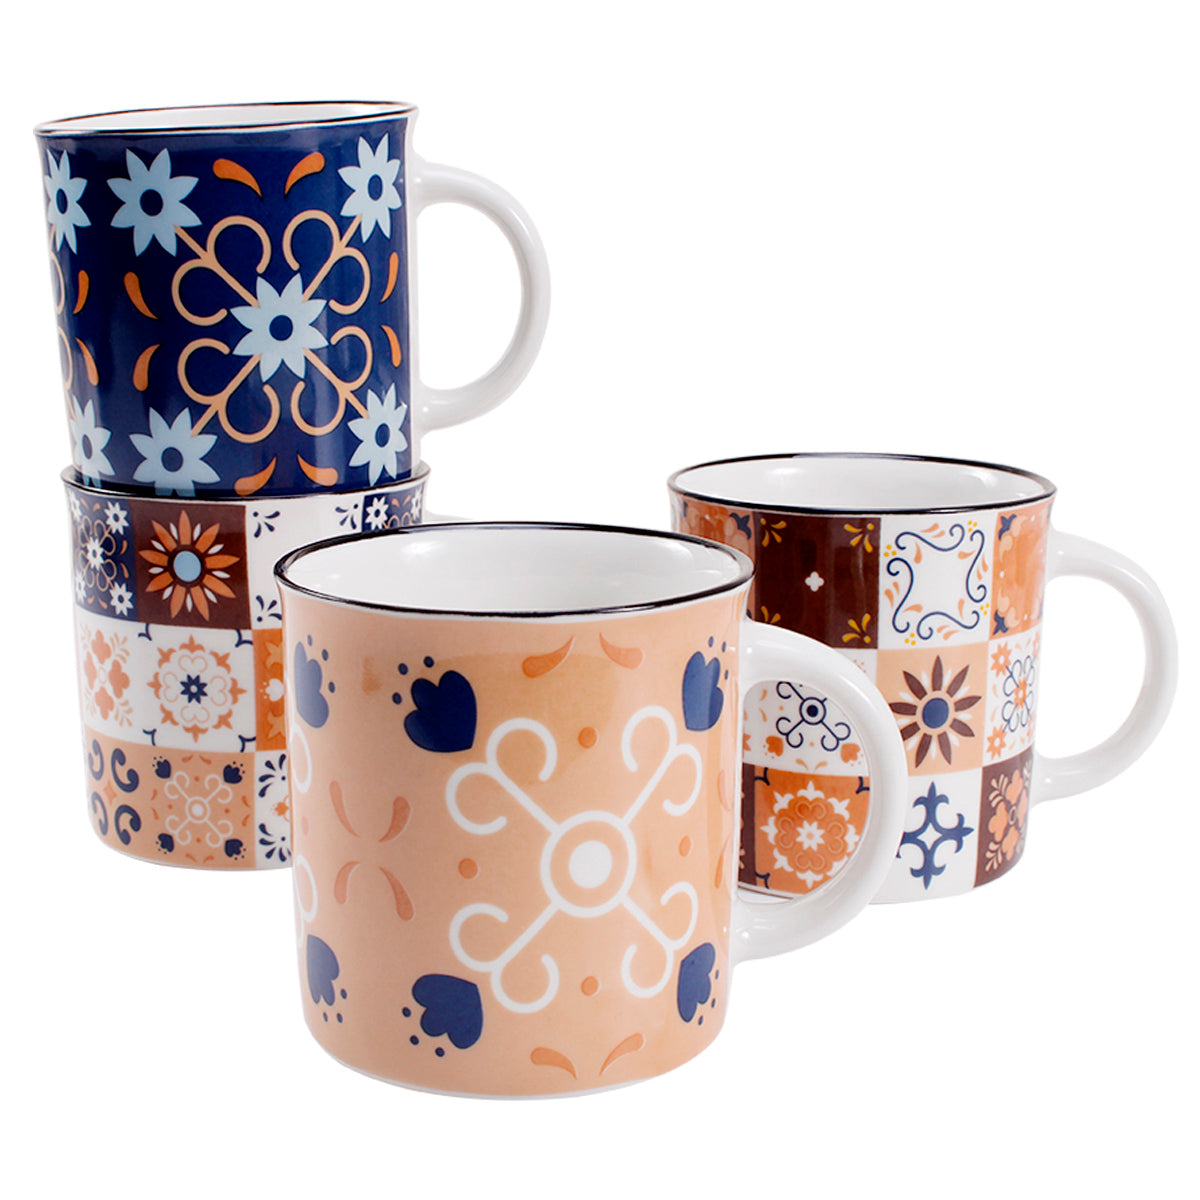 Ebros - Juego de 4 tazas de té de porcelana con diseño de flores botánicas  grandes y coloridas, con colador como teteras y tazas de té, para